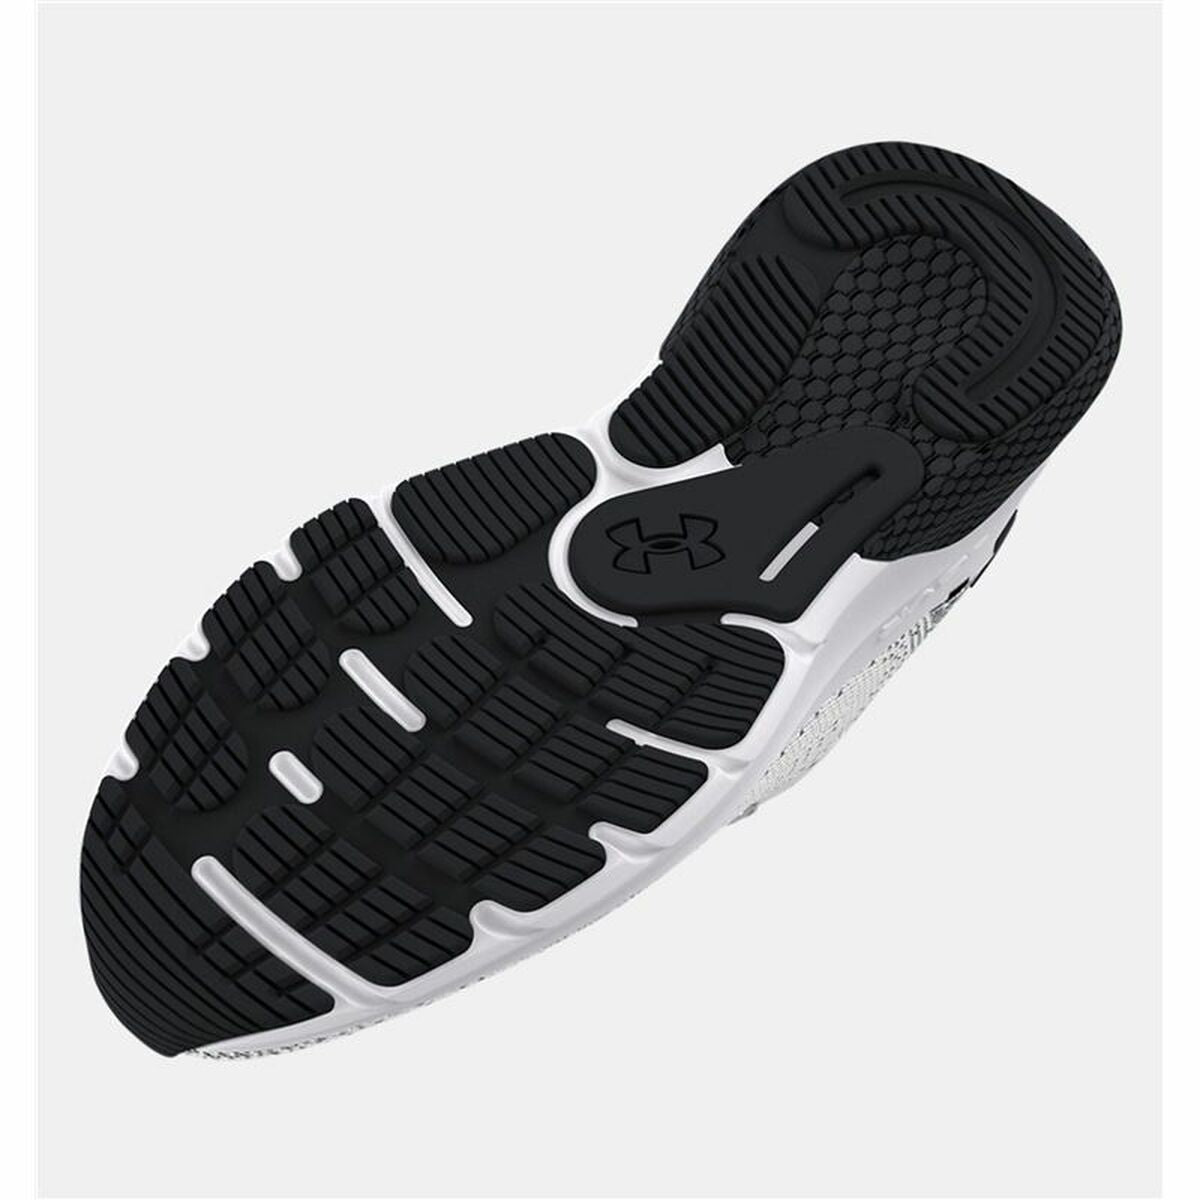 Chaussures de Running pour Adultes Under Armour Hovr Turbulence 2  Blanc Noir Homme